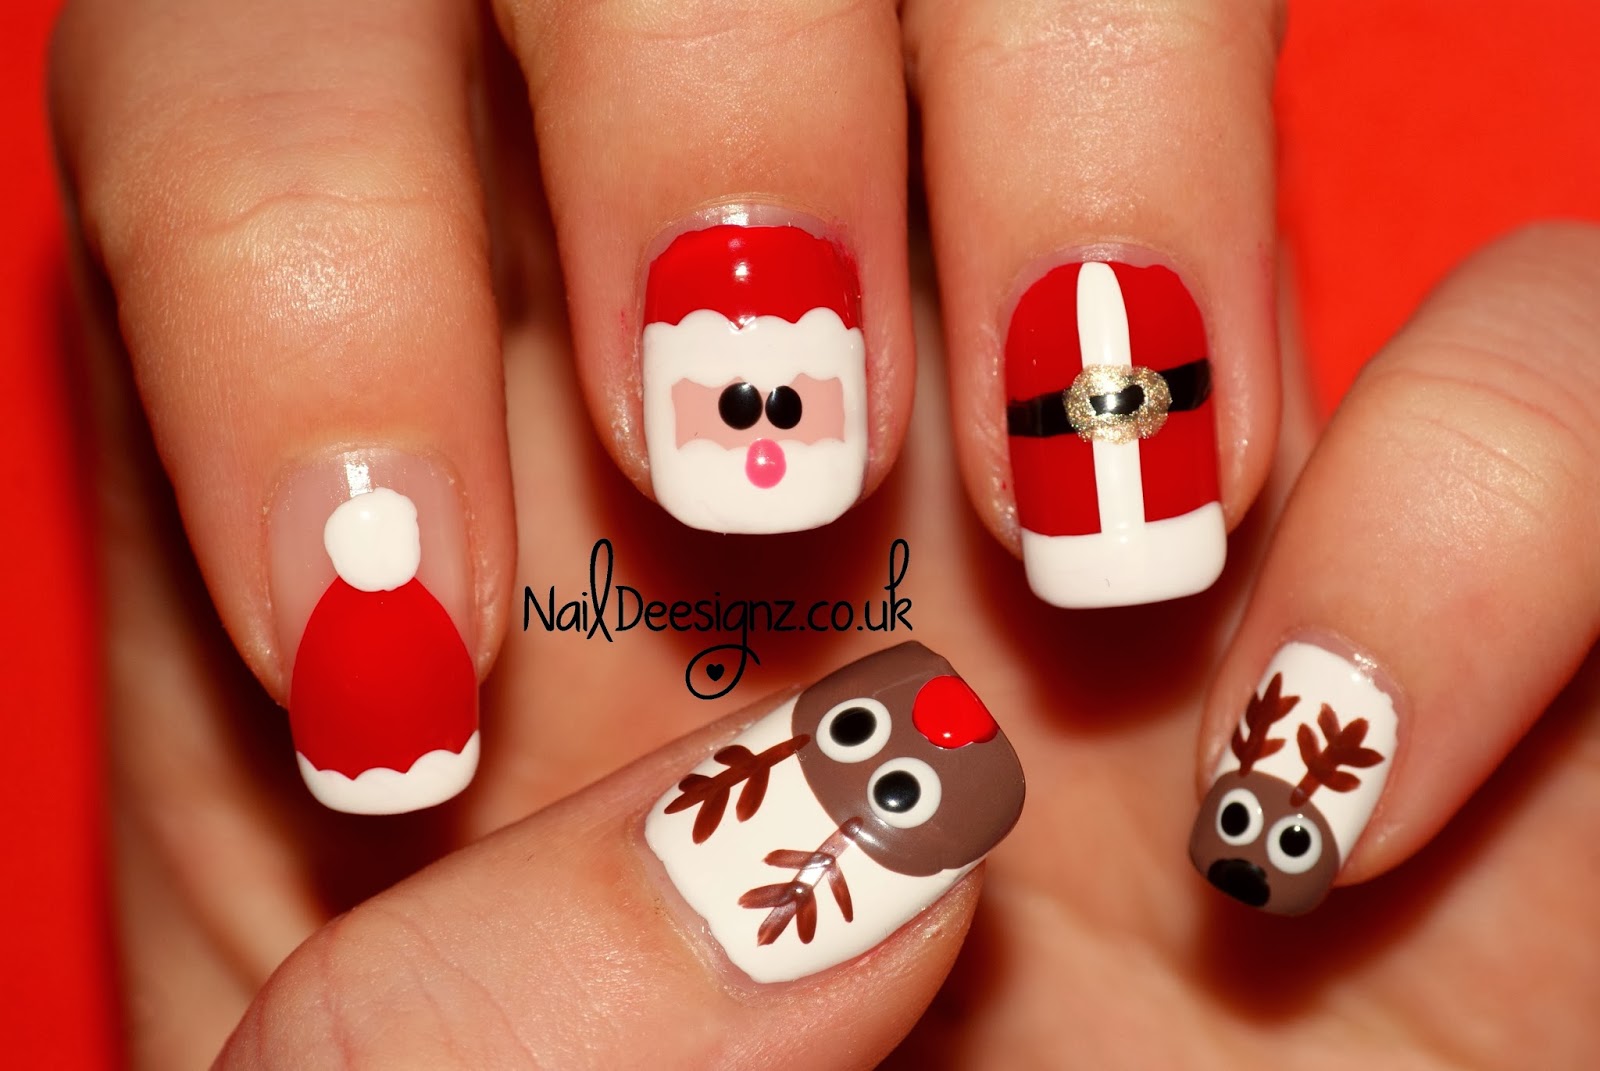 Cute Reindeer Nail Art on Pinterest - wide 4